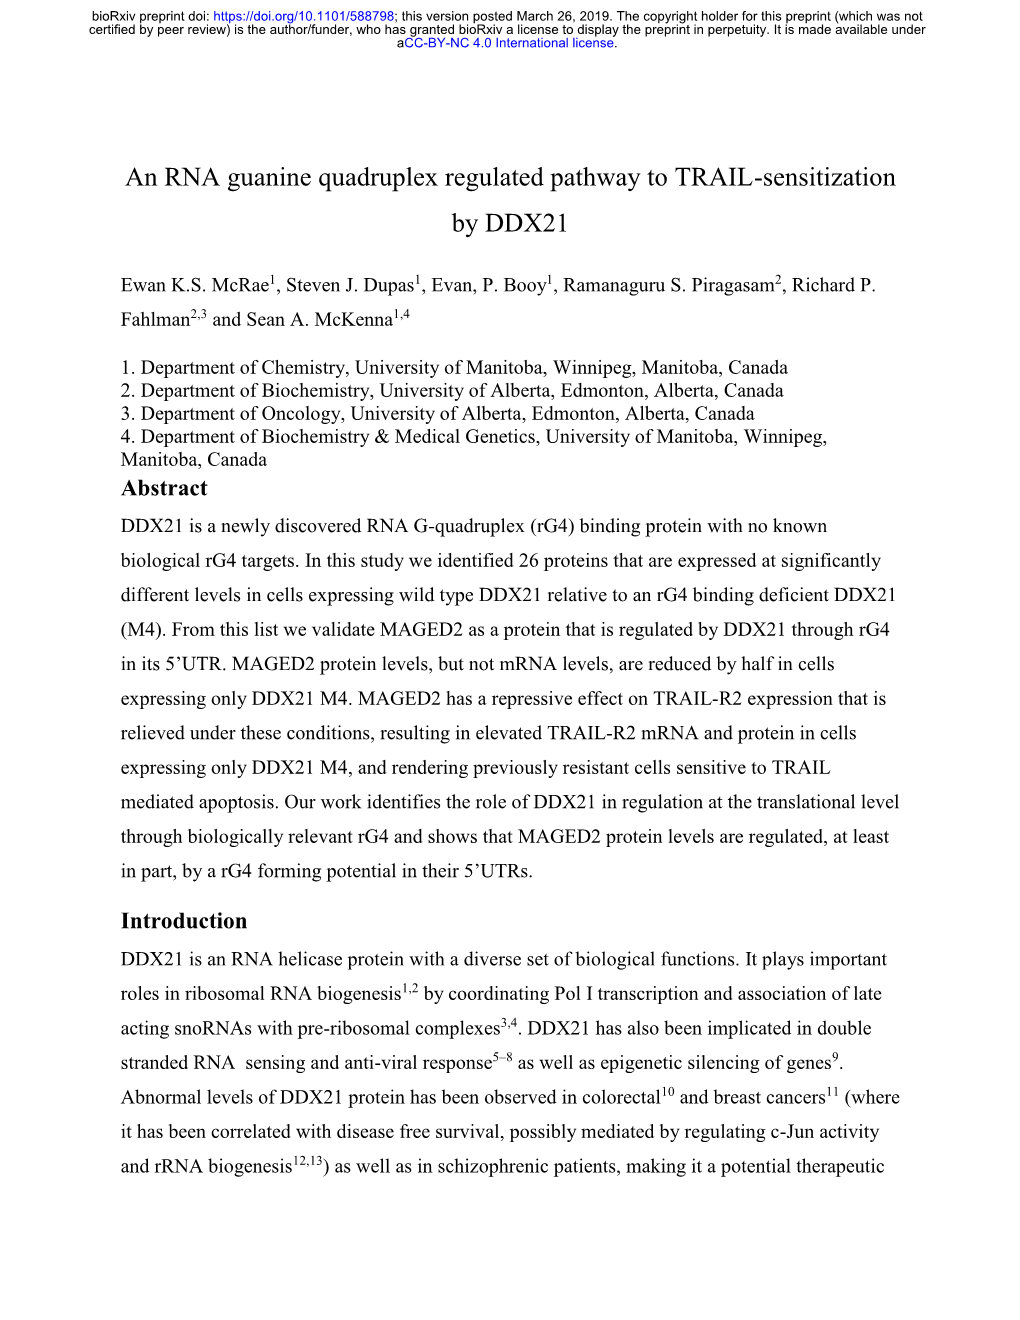 An RNA Guanine Quadruplex Regulated Pathway to TRAIL-Sensitization by DDX21